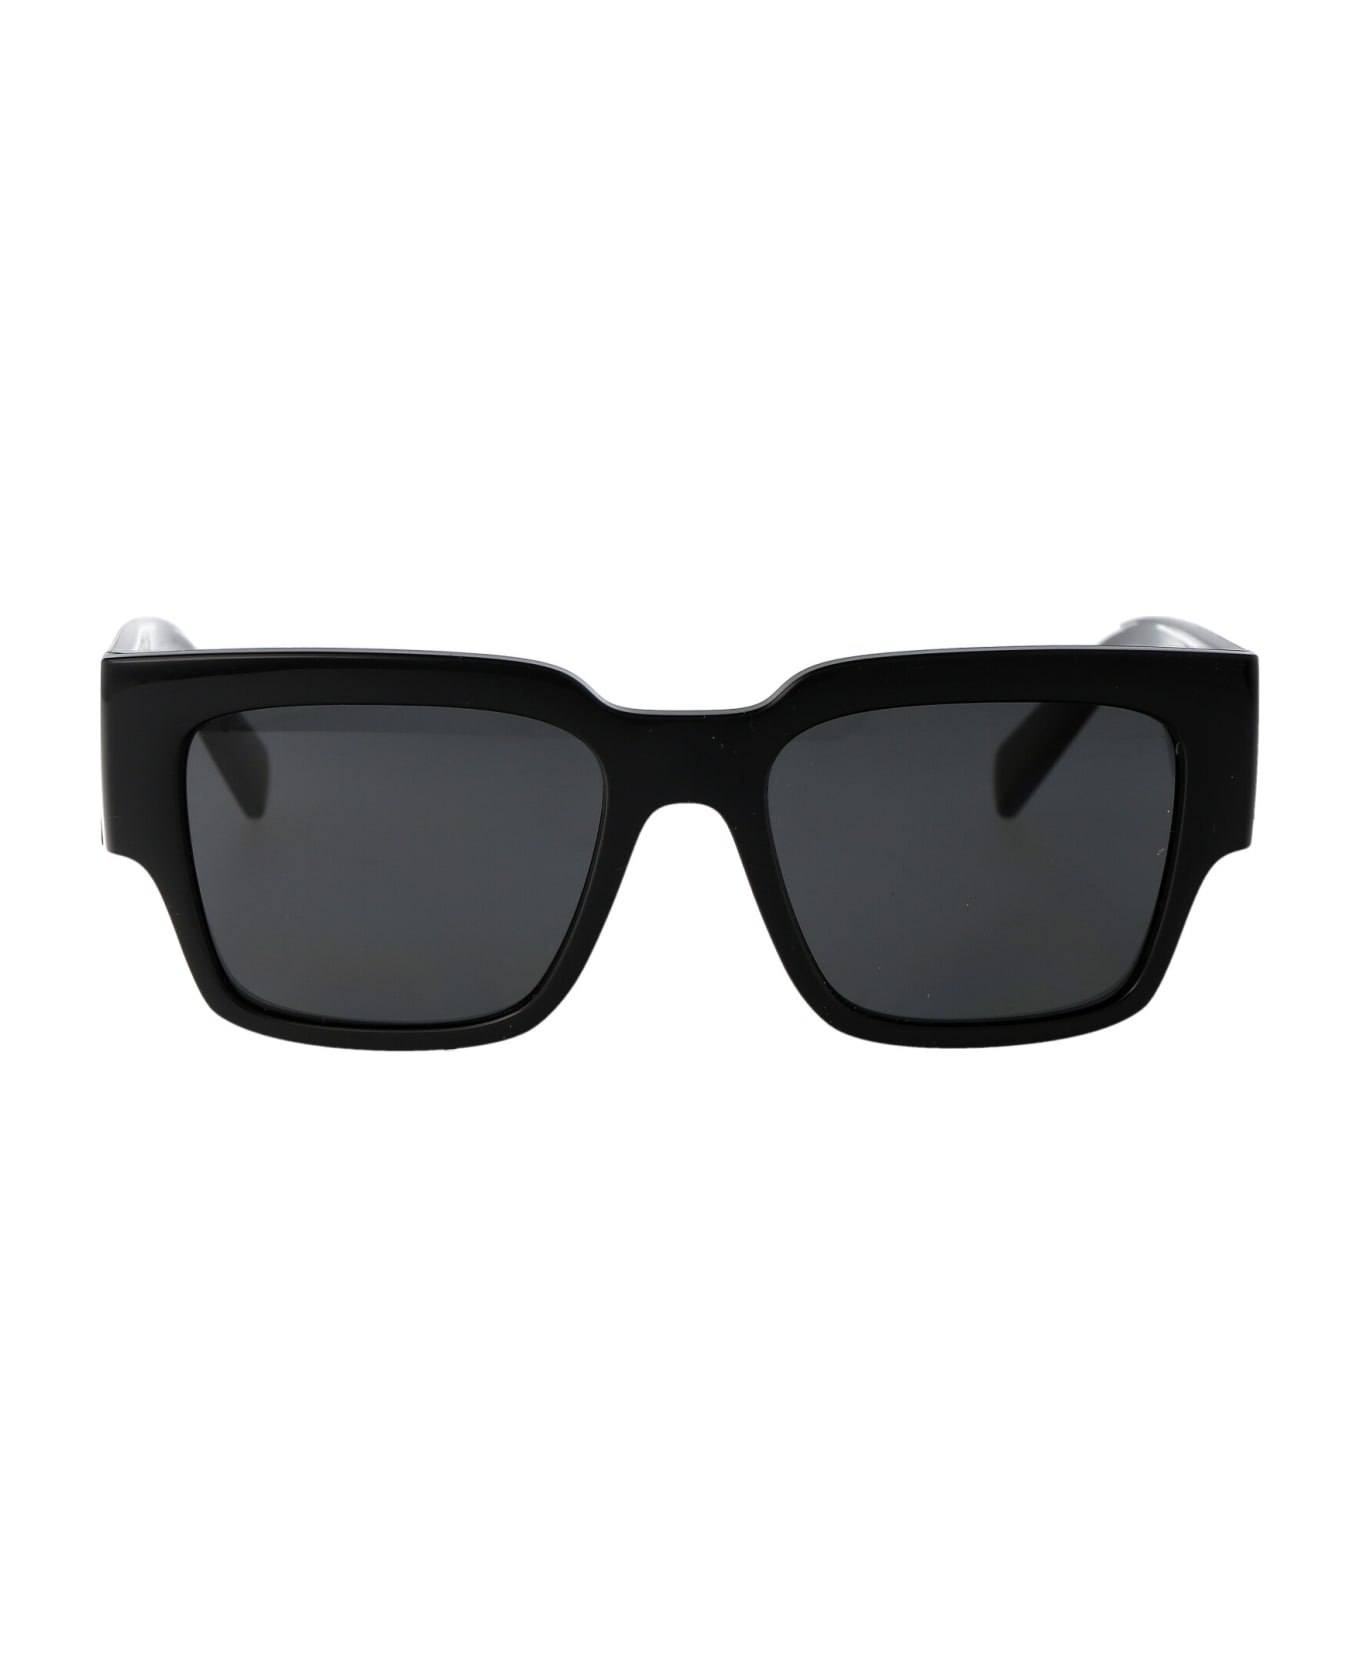 Dolce & Gabbana Eyewear 0dg6184 Sunglasses - 501/87 BLACK サングラス